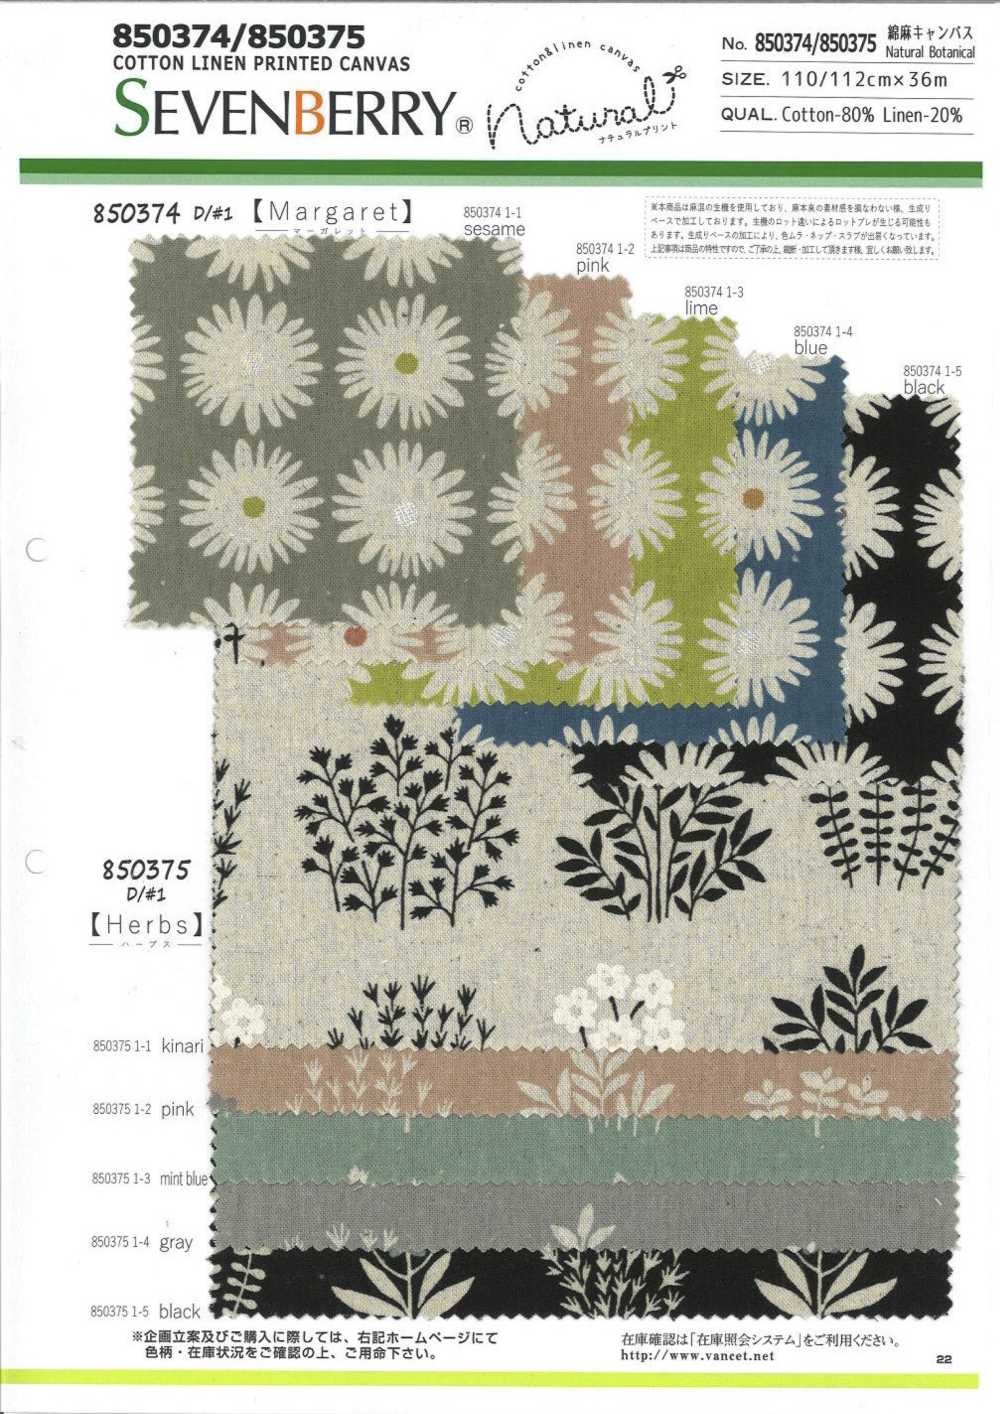 850374 Lino Lino Lienzo Natural Botánico Margaret[Fabrica Textil] VANCET